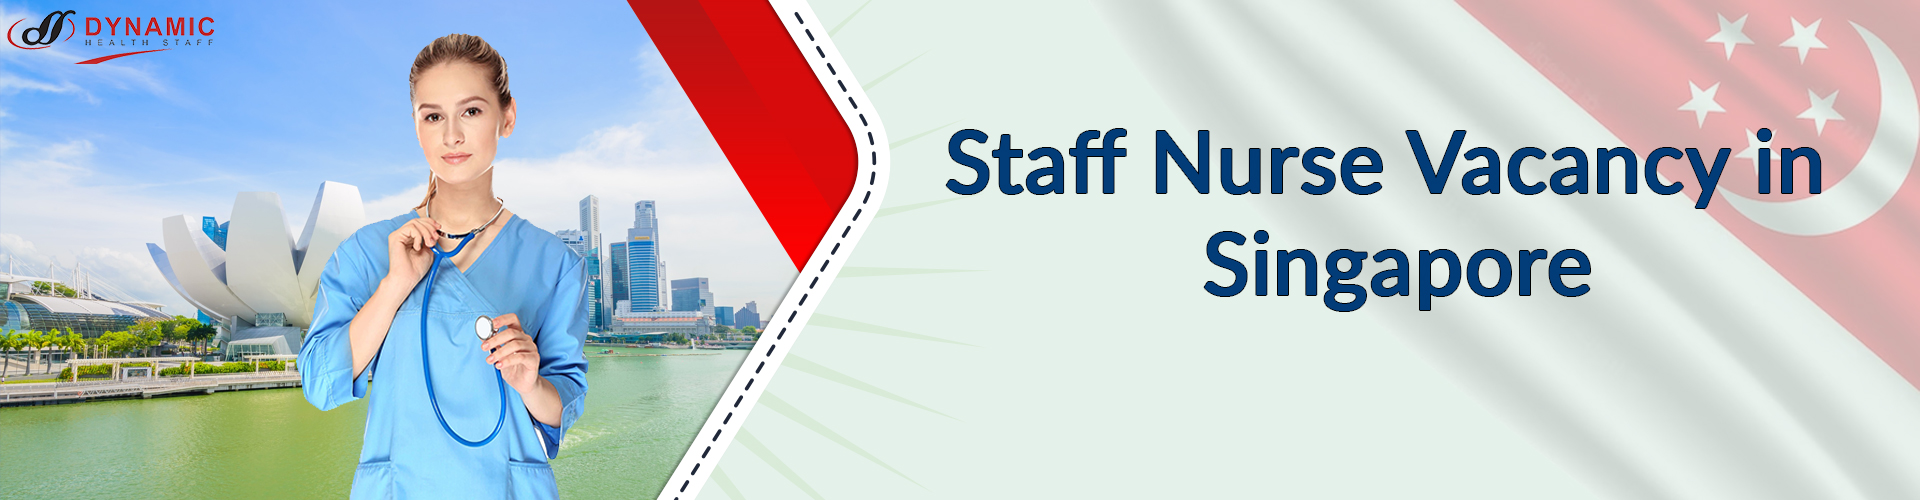 Staff Nurse Vacancy in Singapore